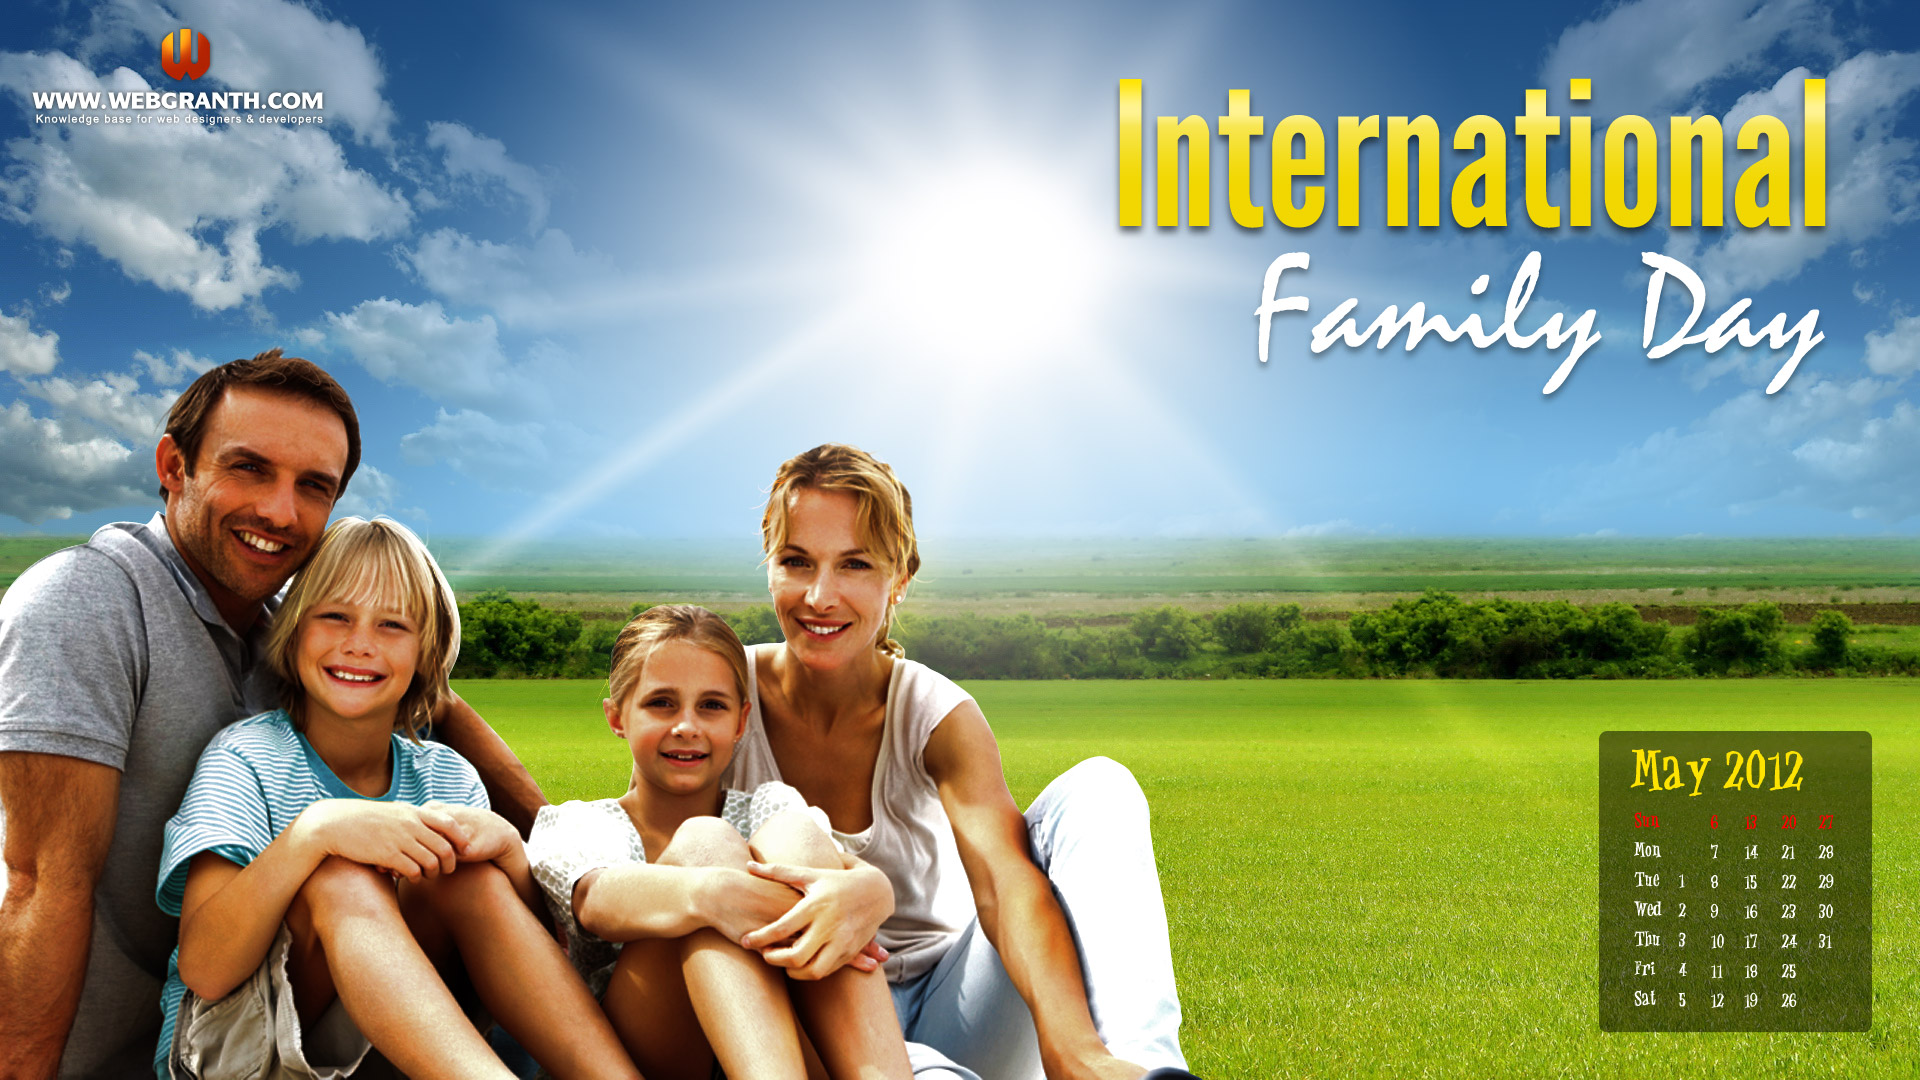 Download free Desktop International Family Day Wallpaper   Webgranth